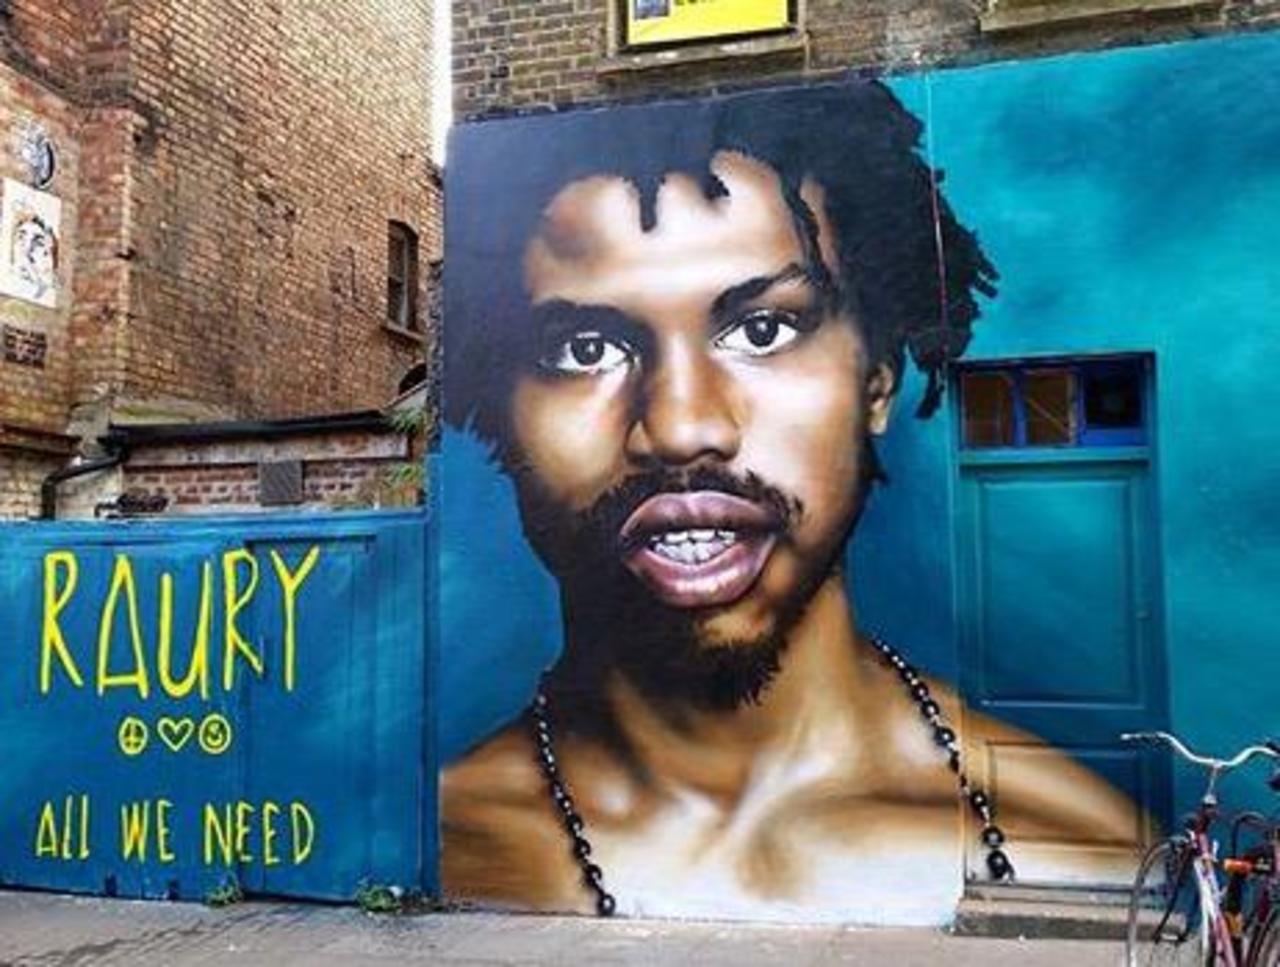 New Street Art of Raury by Olliver Switch in Brick Lane 

#art #graffiti #mural #streetart http://t.co/62rVqT8pBr